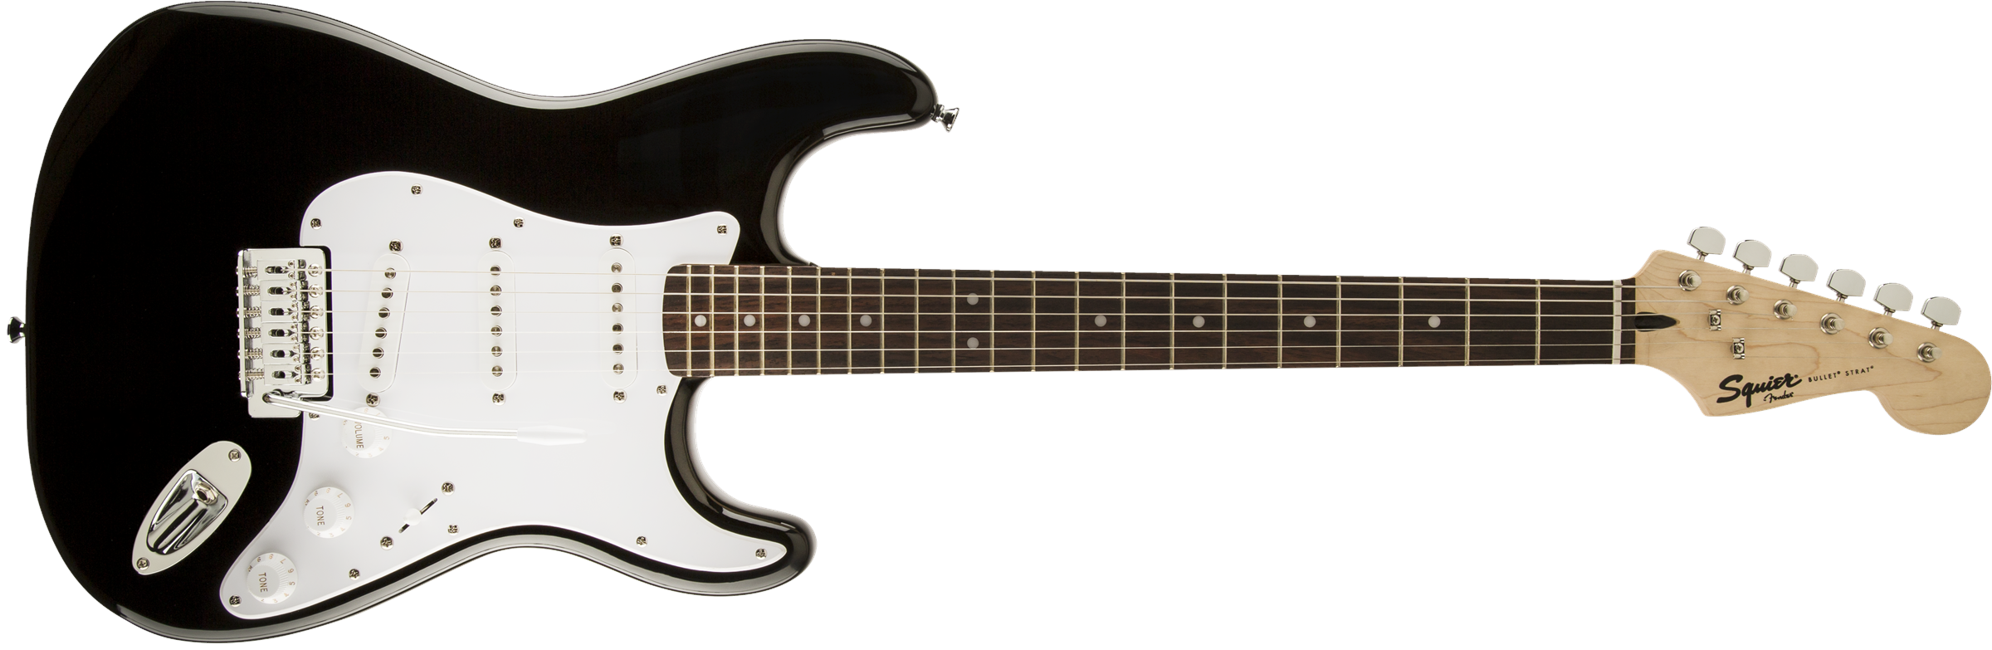 Squier By Fender - Bullet Stratocaster - Elektrisk Guitar (Black)